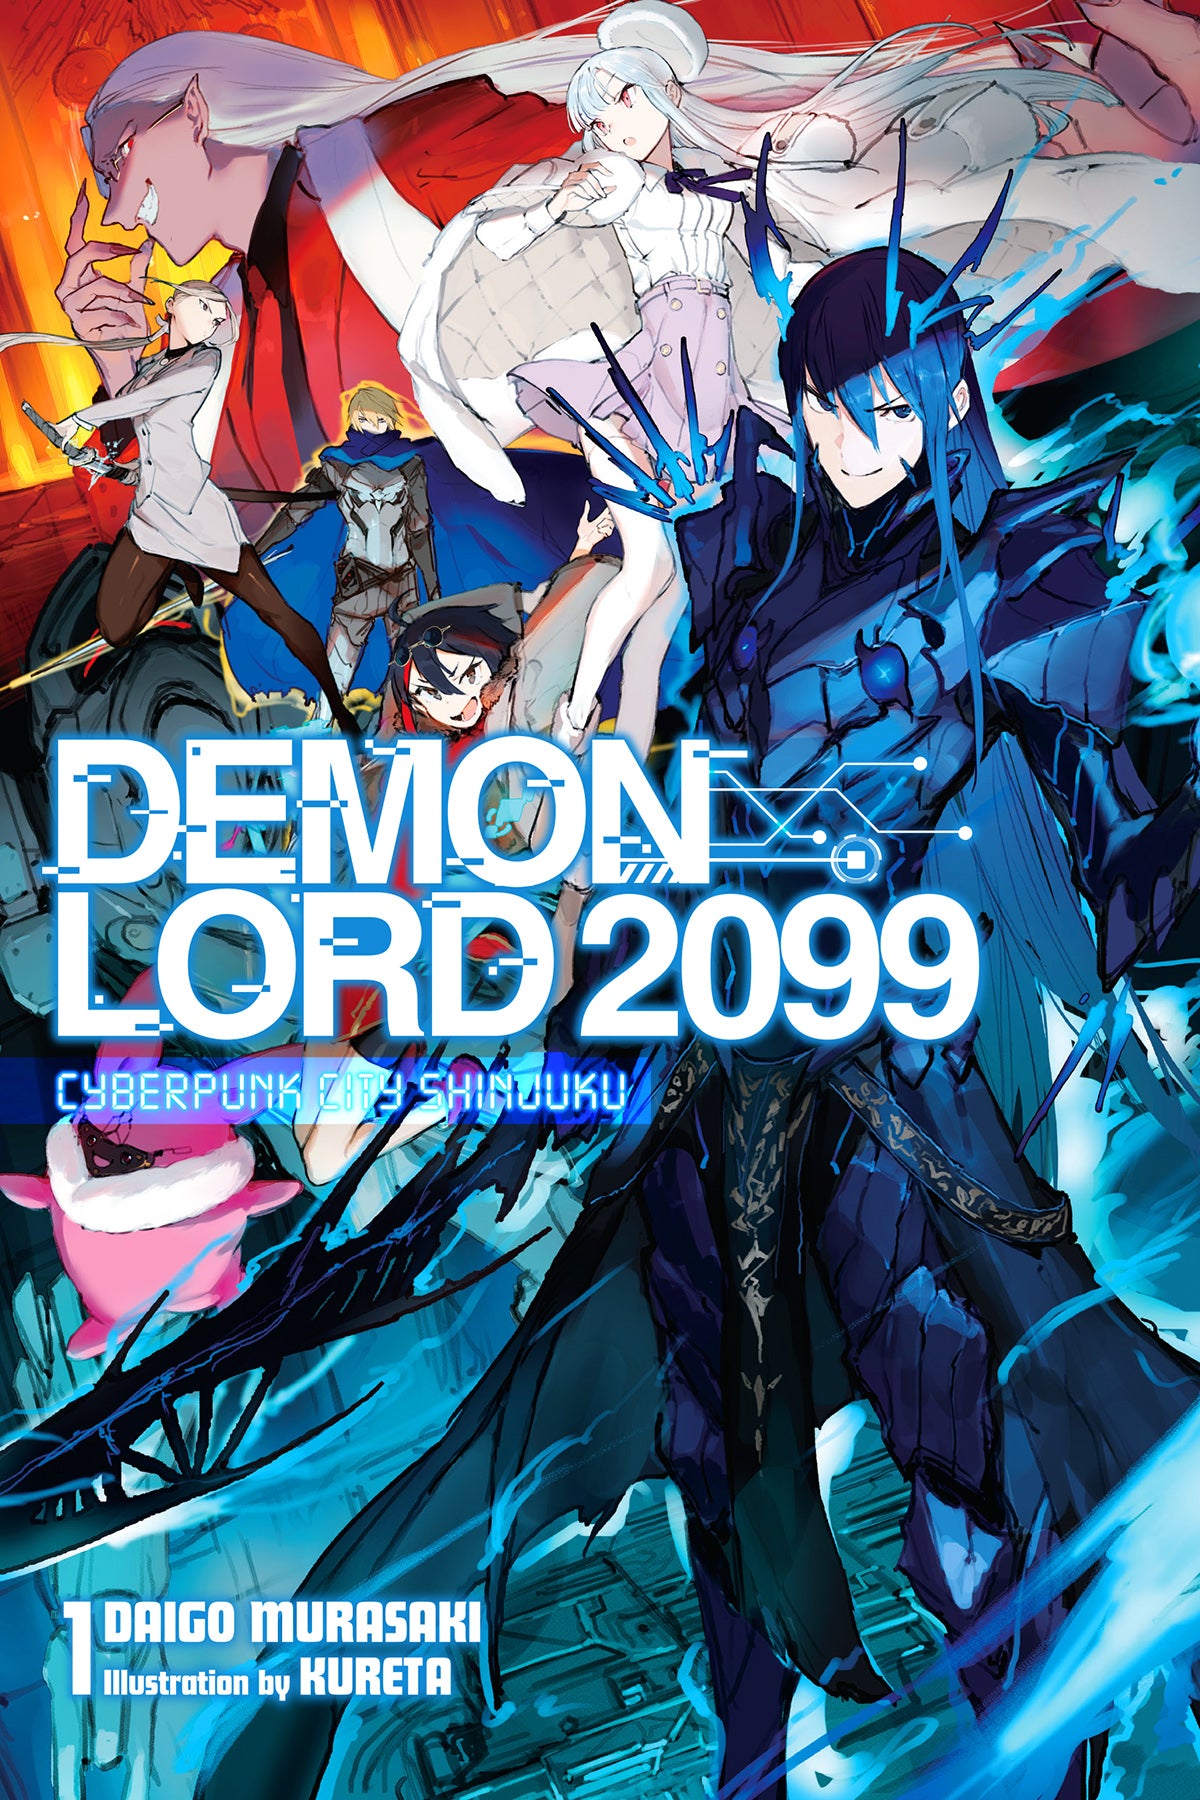 Demon Lord 2099 Vol. 01 (Light Novel): Cyberpunk City Shinjuku